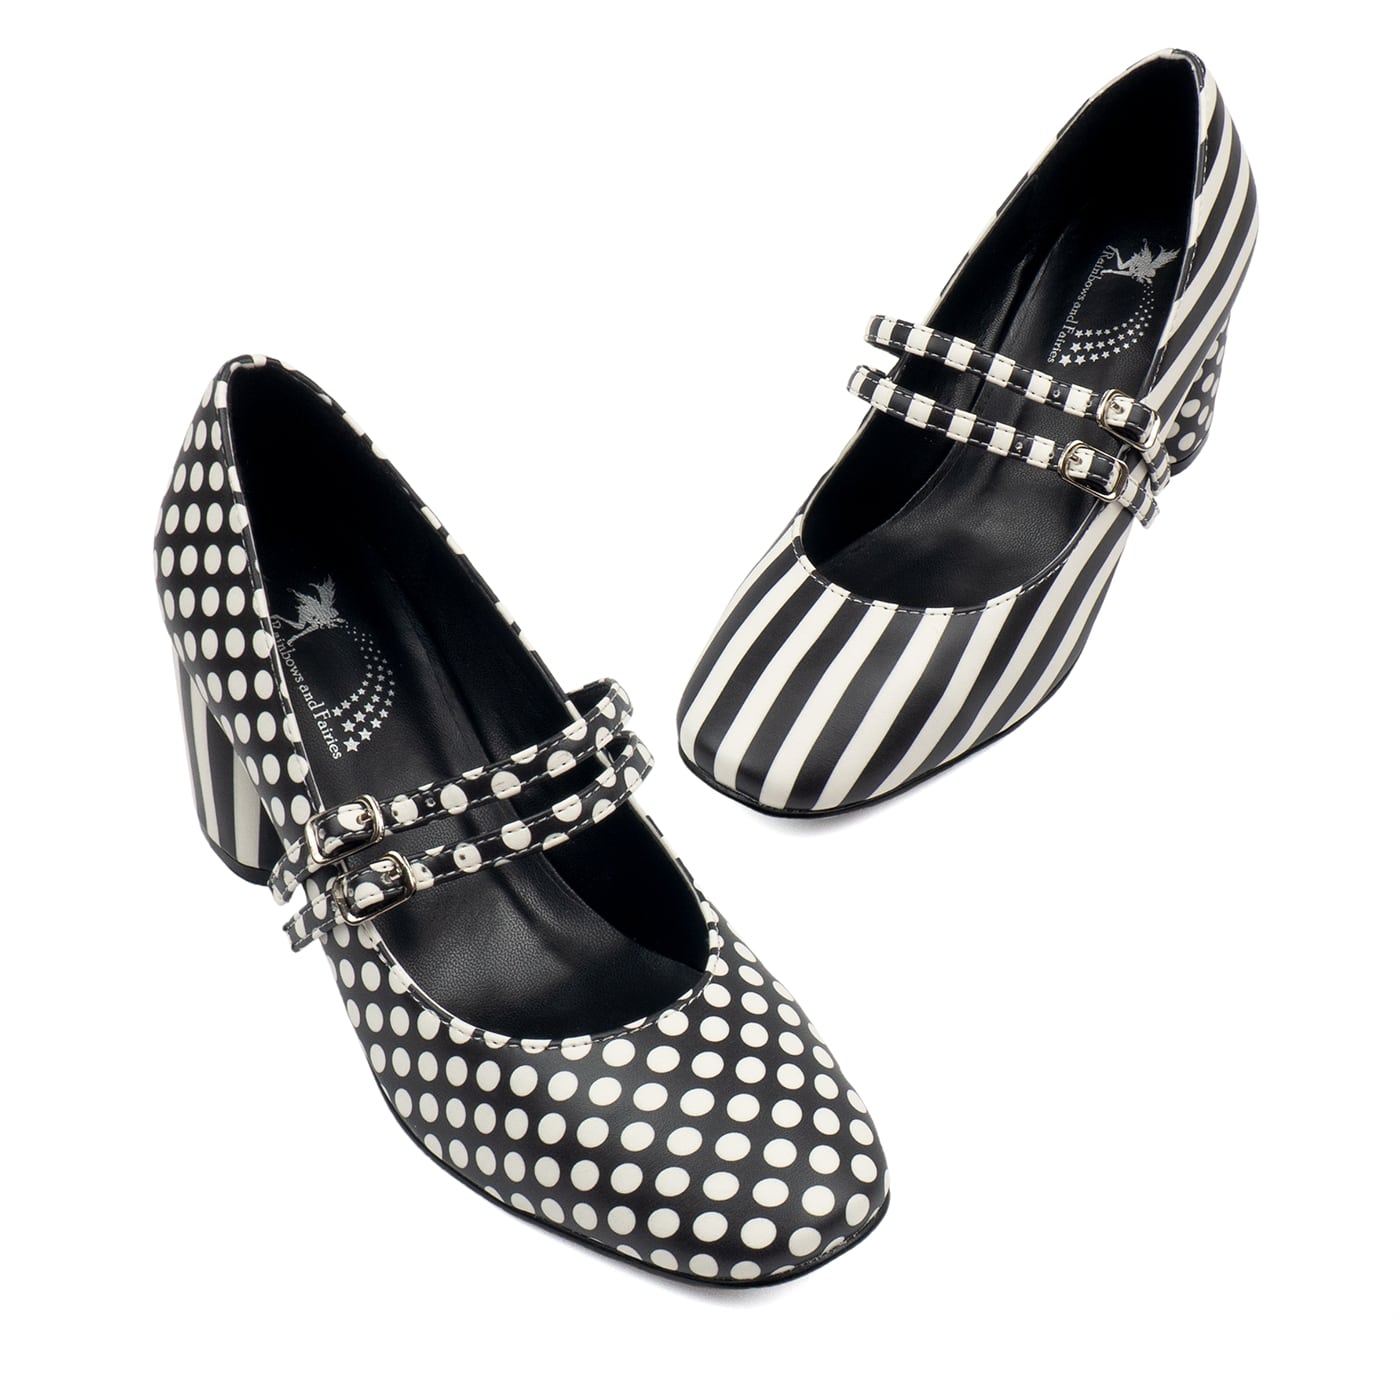 Monochrome Heels by RainbowsAndFairies.com (Black & White Stripes - Polka Dots - Classic - Kitten Heels - Mismatched Shoes) - SKU: FW_HEELS_MONOC_ORG - Pic 01